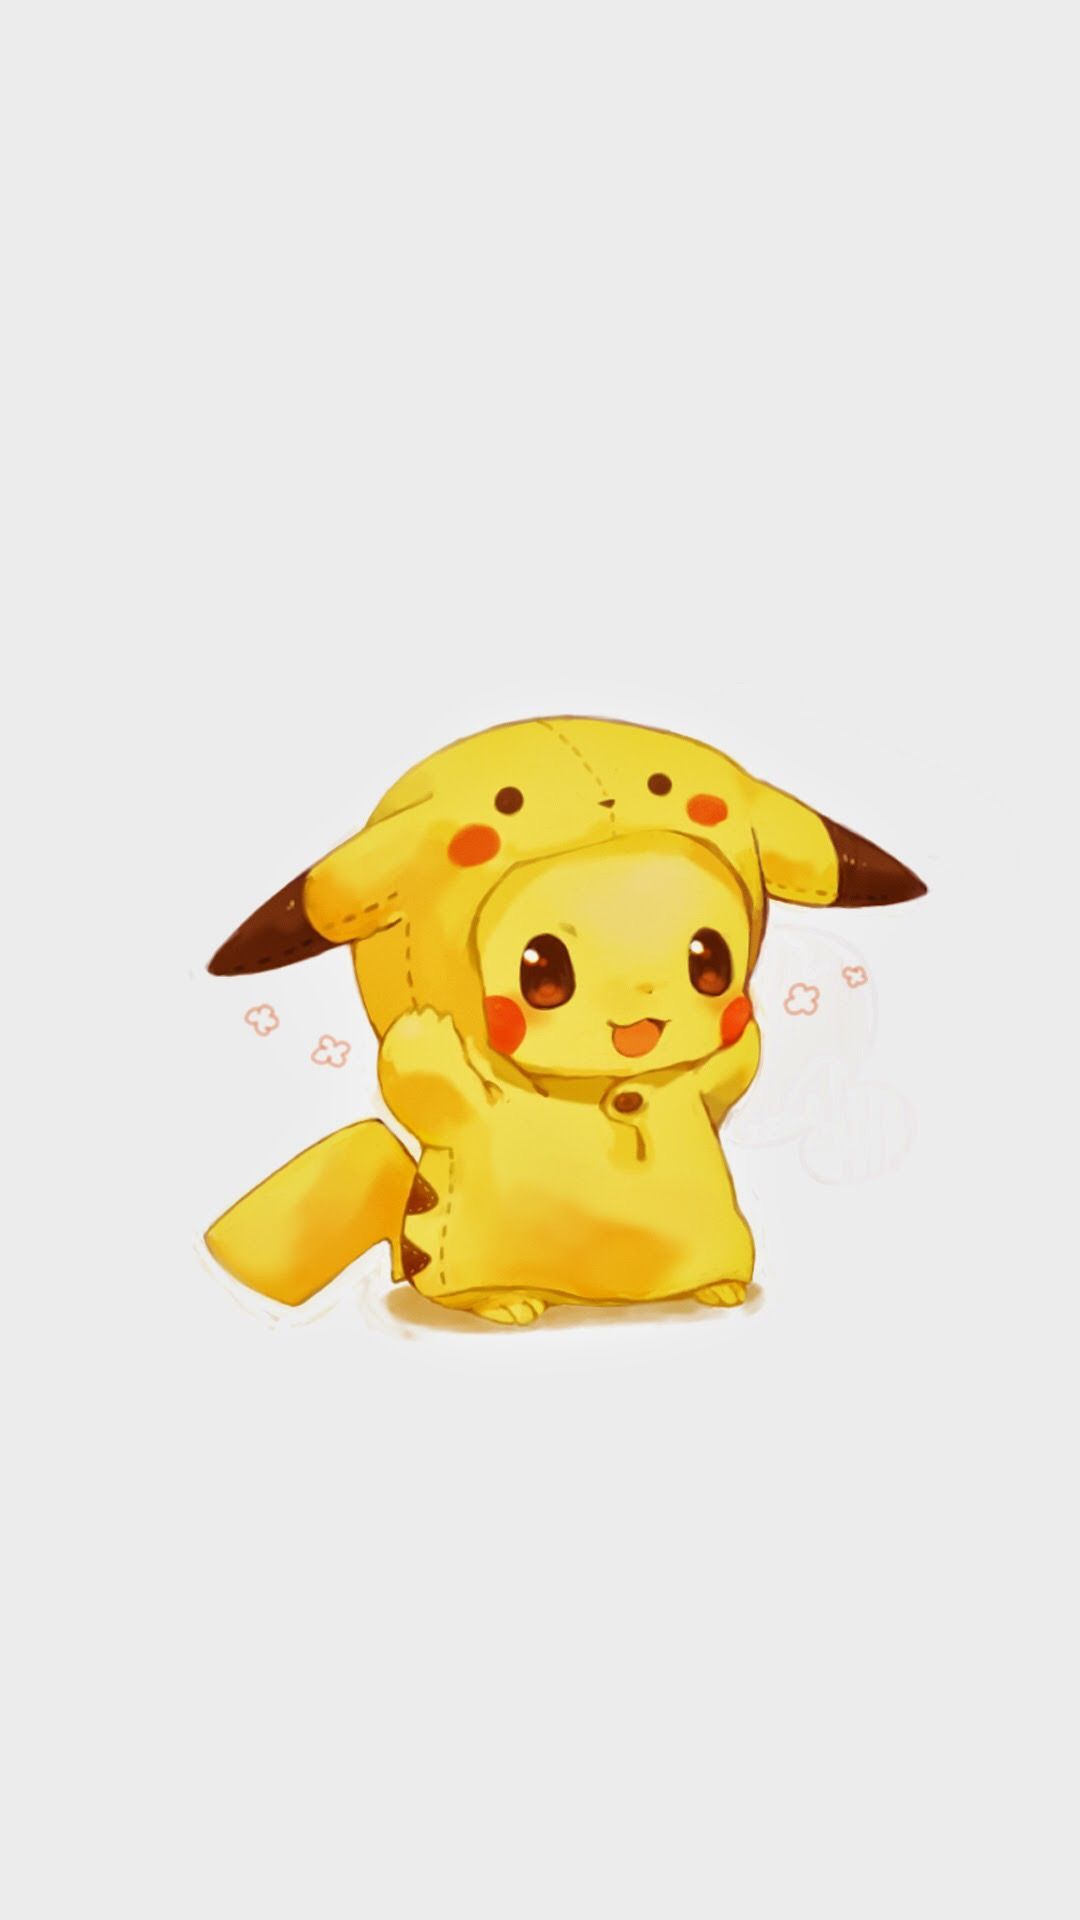 Cool Pikachu Wallpapers